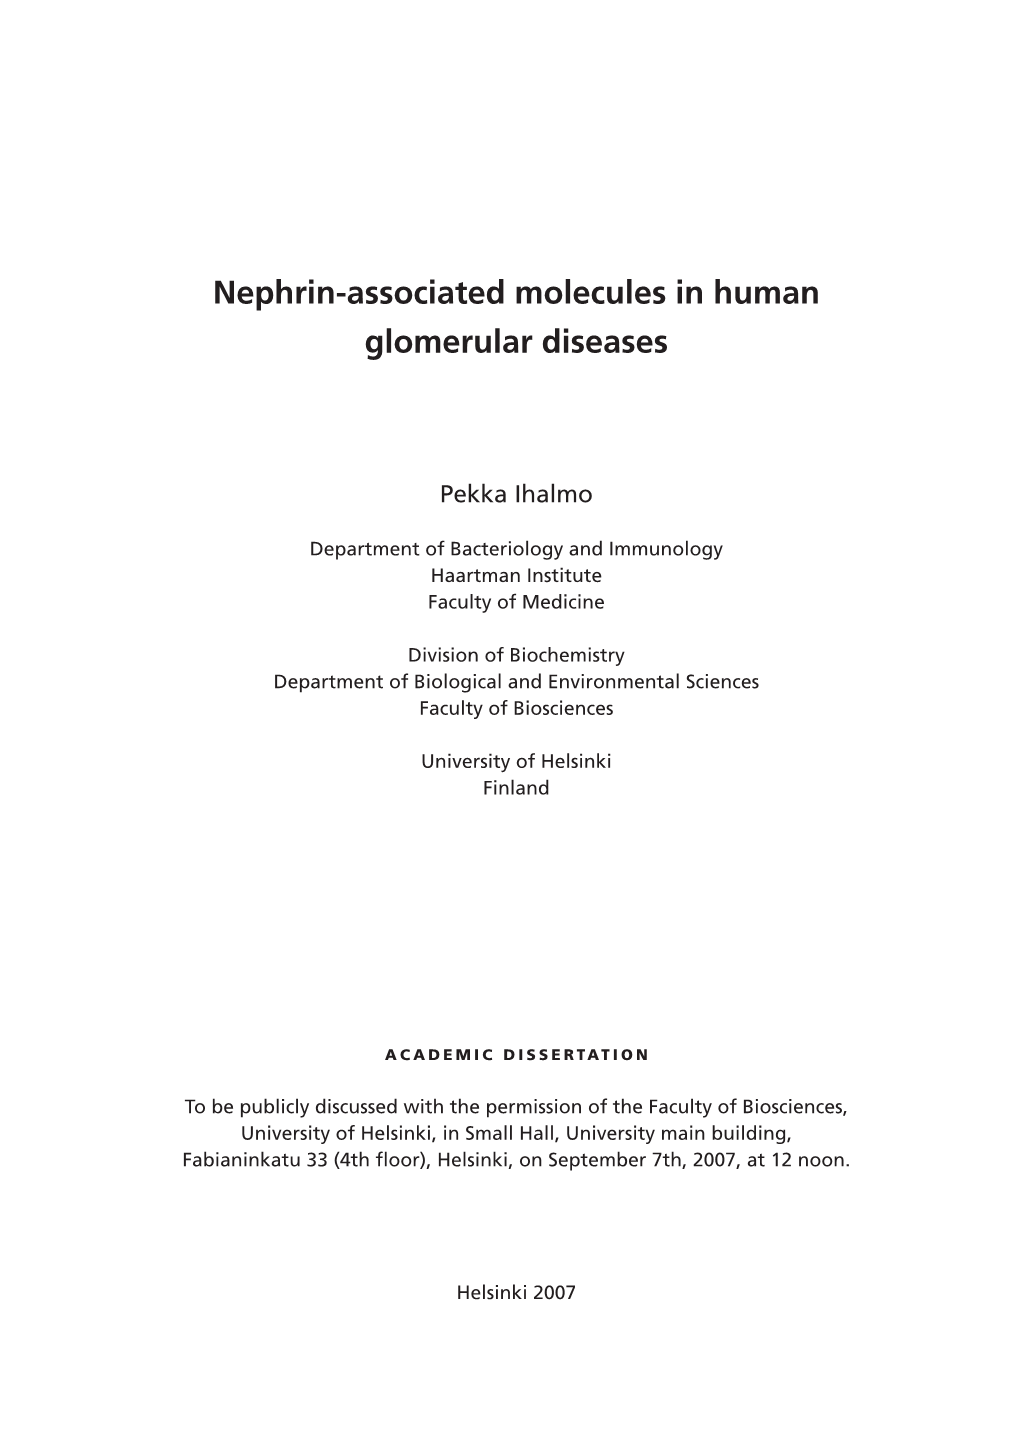 Nephrin-Associated Molecule in Human Glomerular Diseases